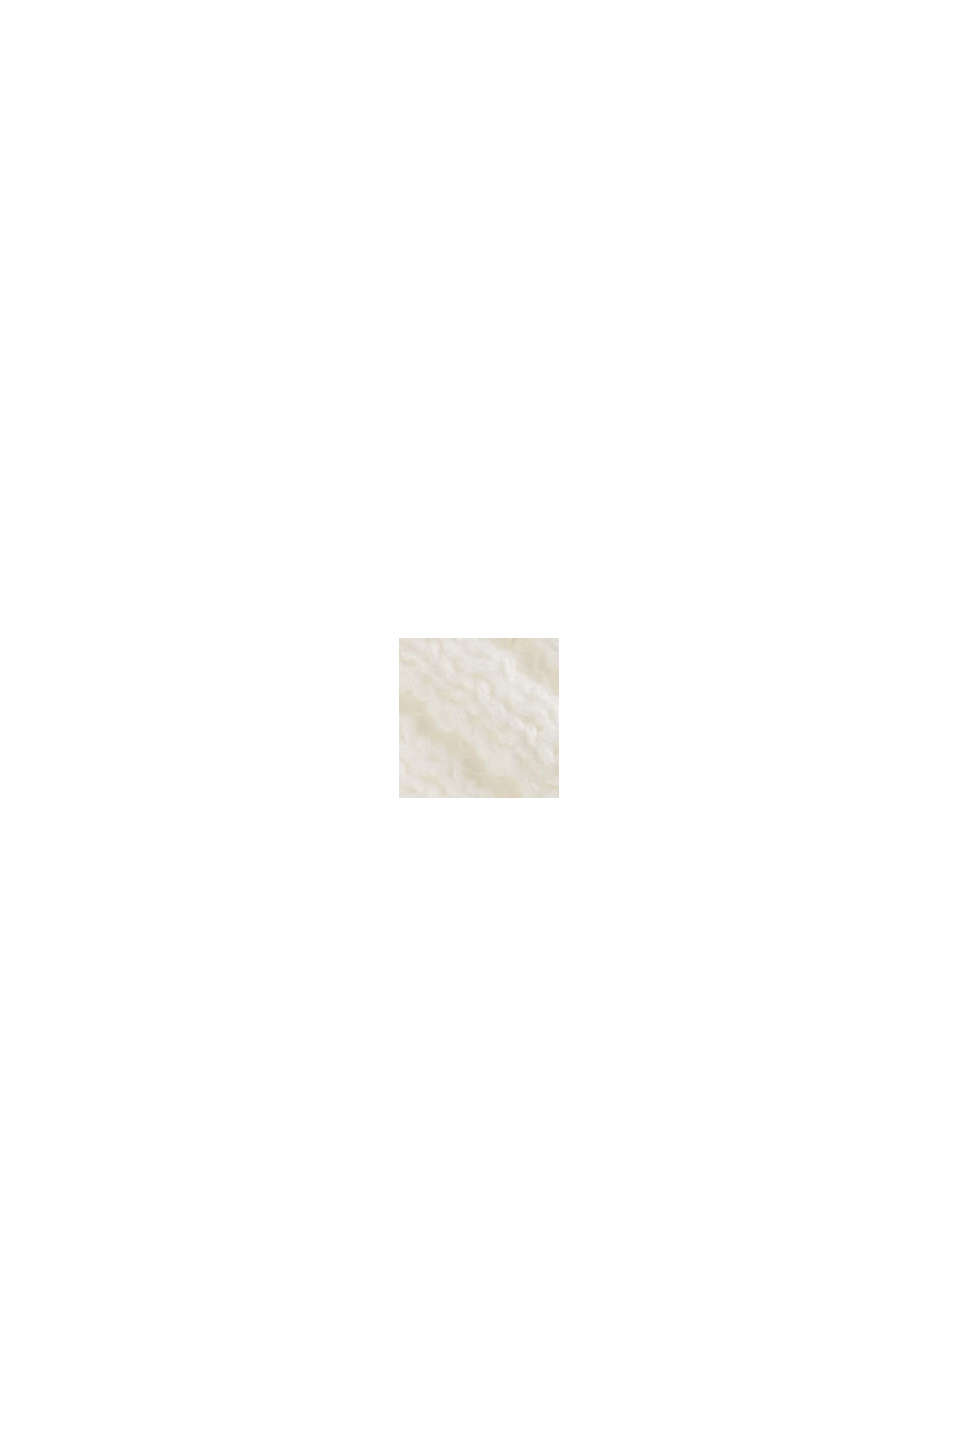 Pulovr s pleteným vzorem, z bio bavlny, OFF WHITE, swatch